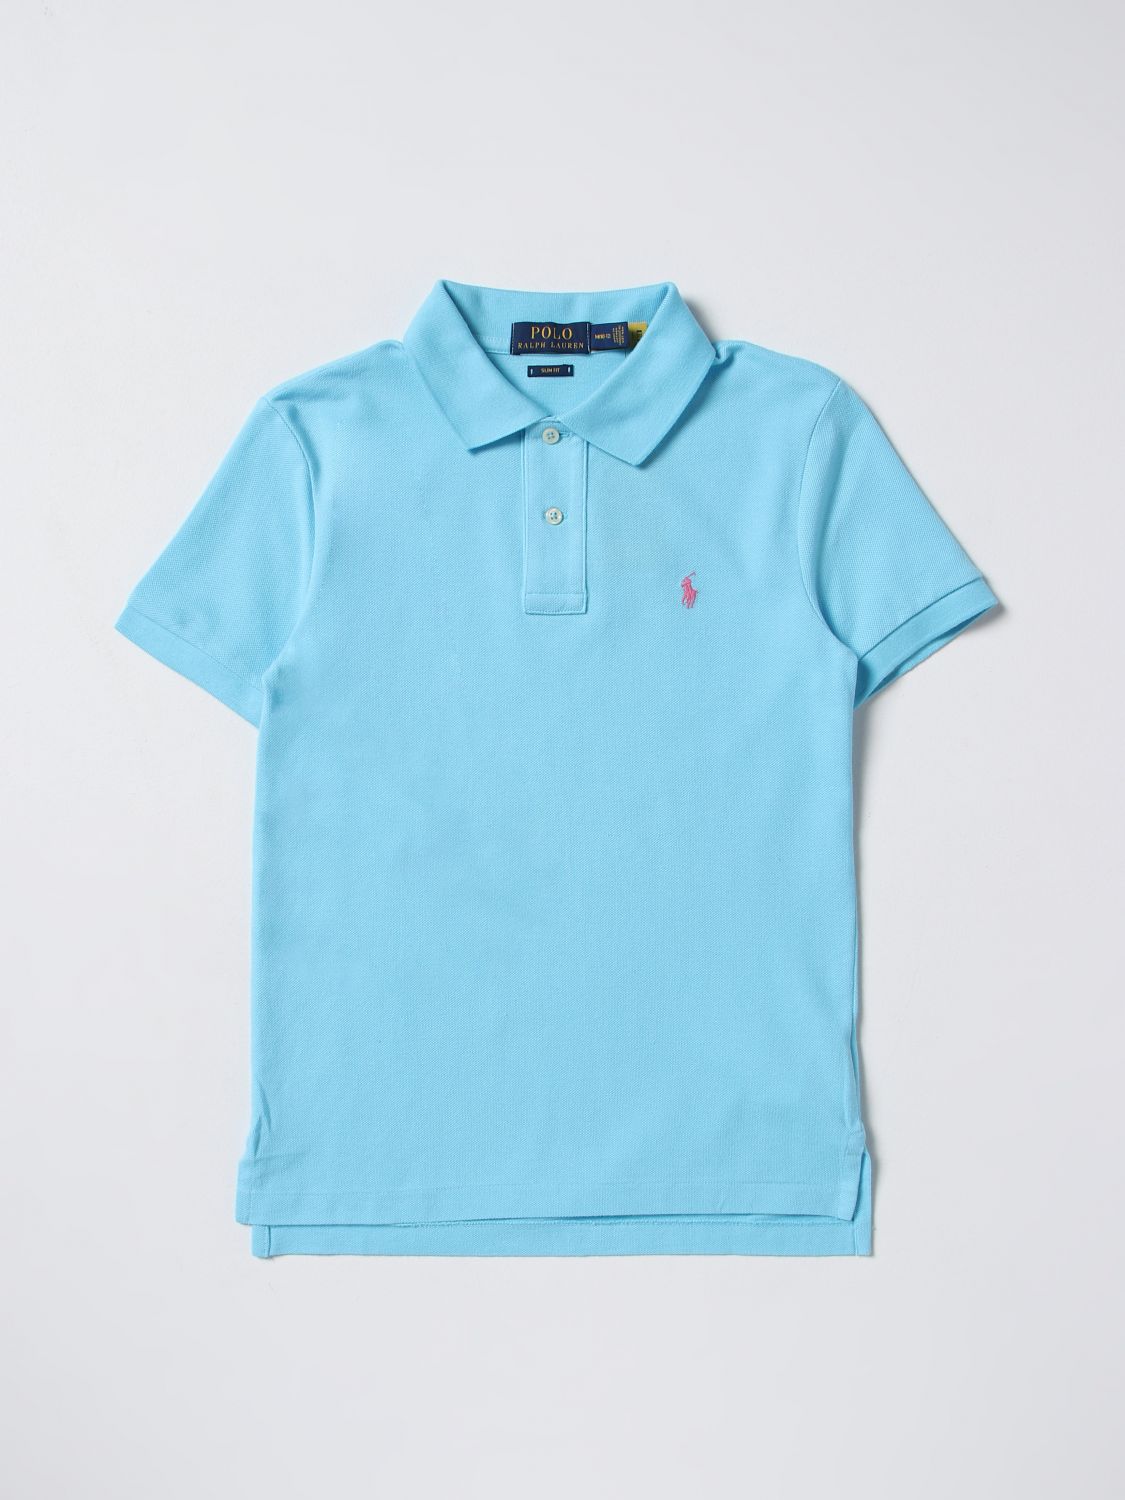 Polo Ralph Lauren Polo Shirt  Kids Color Turquoise